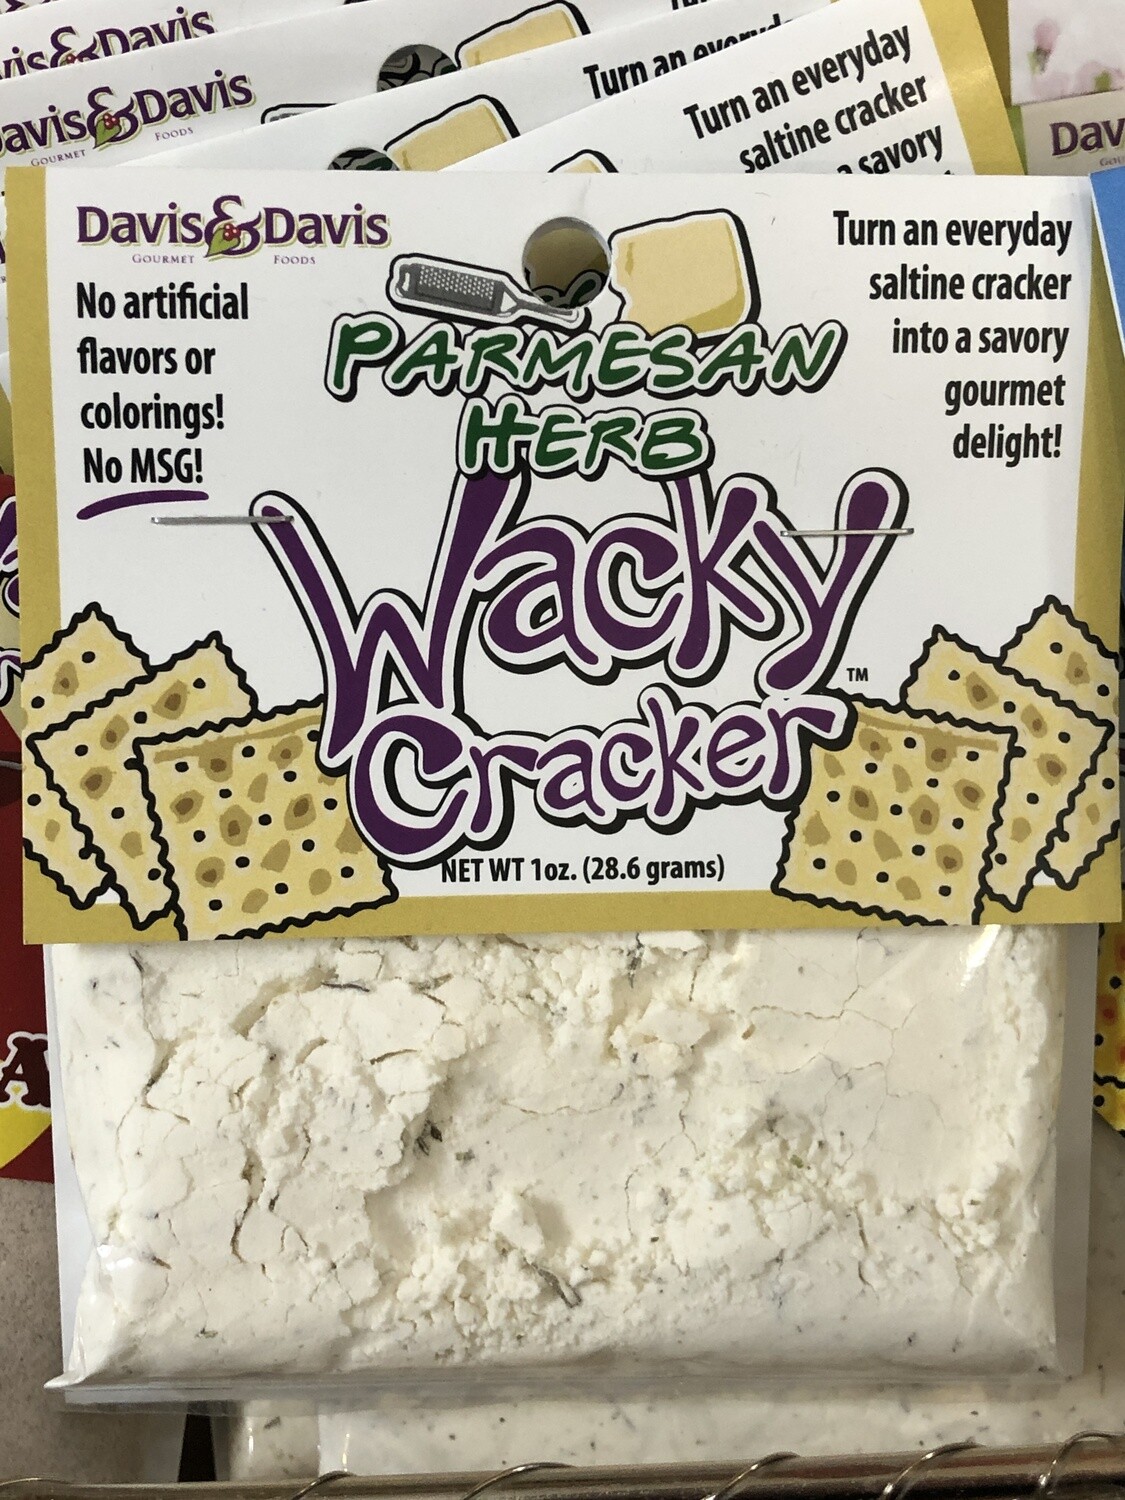 Wacky Cracker Parmesan Herb